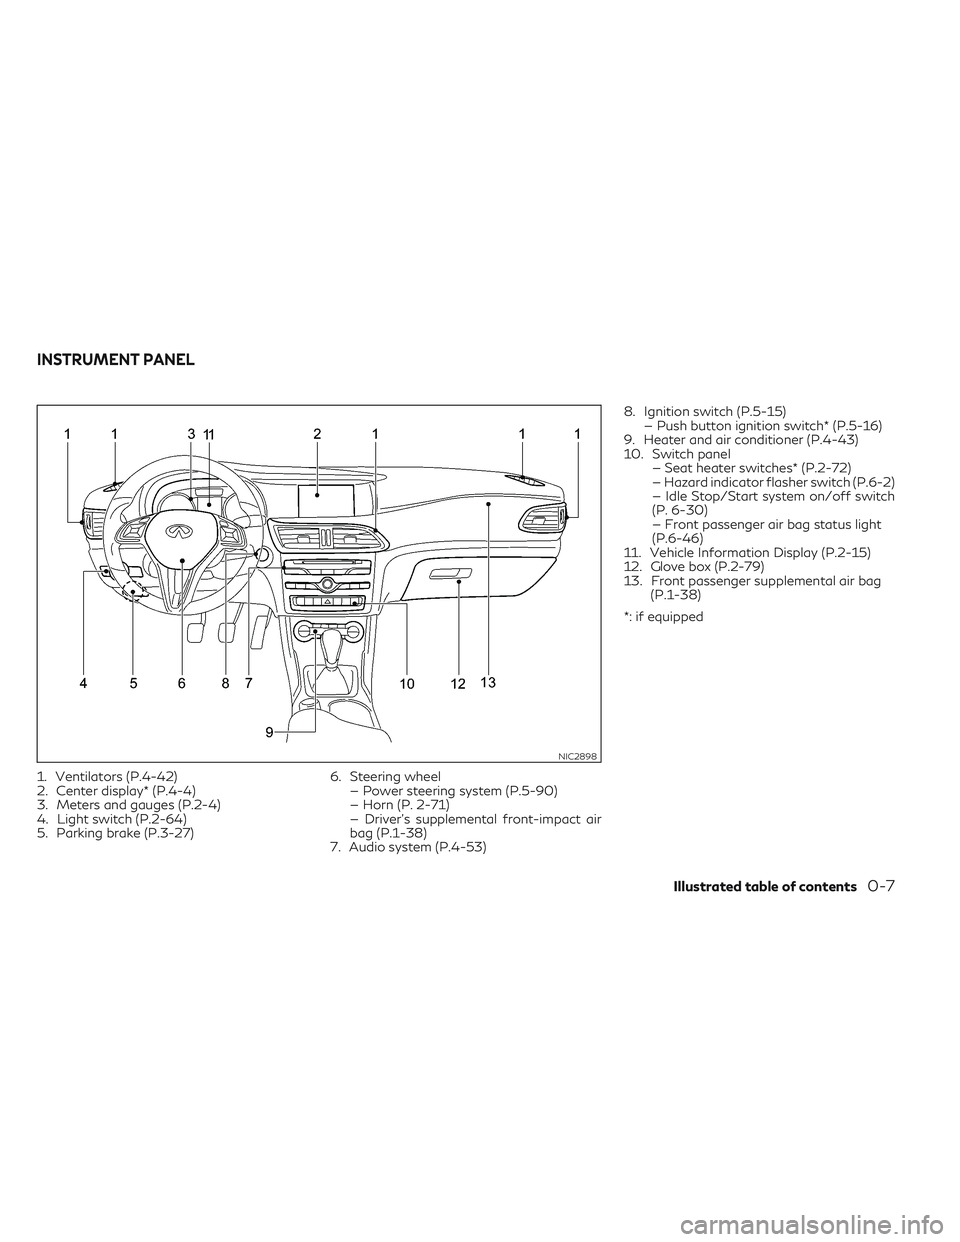 INFINITI QX30 2018  Owners Manual 1. Ventilators (P.4-42)
2. Center display* (P.4-4)
3. Meters and gauges (P.2-4)
4. Light switch (P.2-64)
5. Parking brake (P.3-27)6. Steering wheel
— Power steering system (P.5-90)
— Horn (P. 2-71